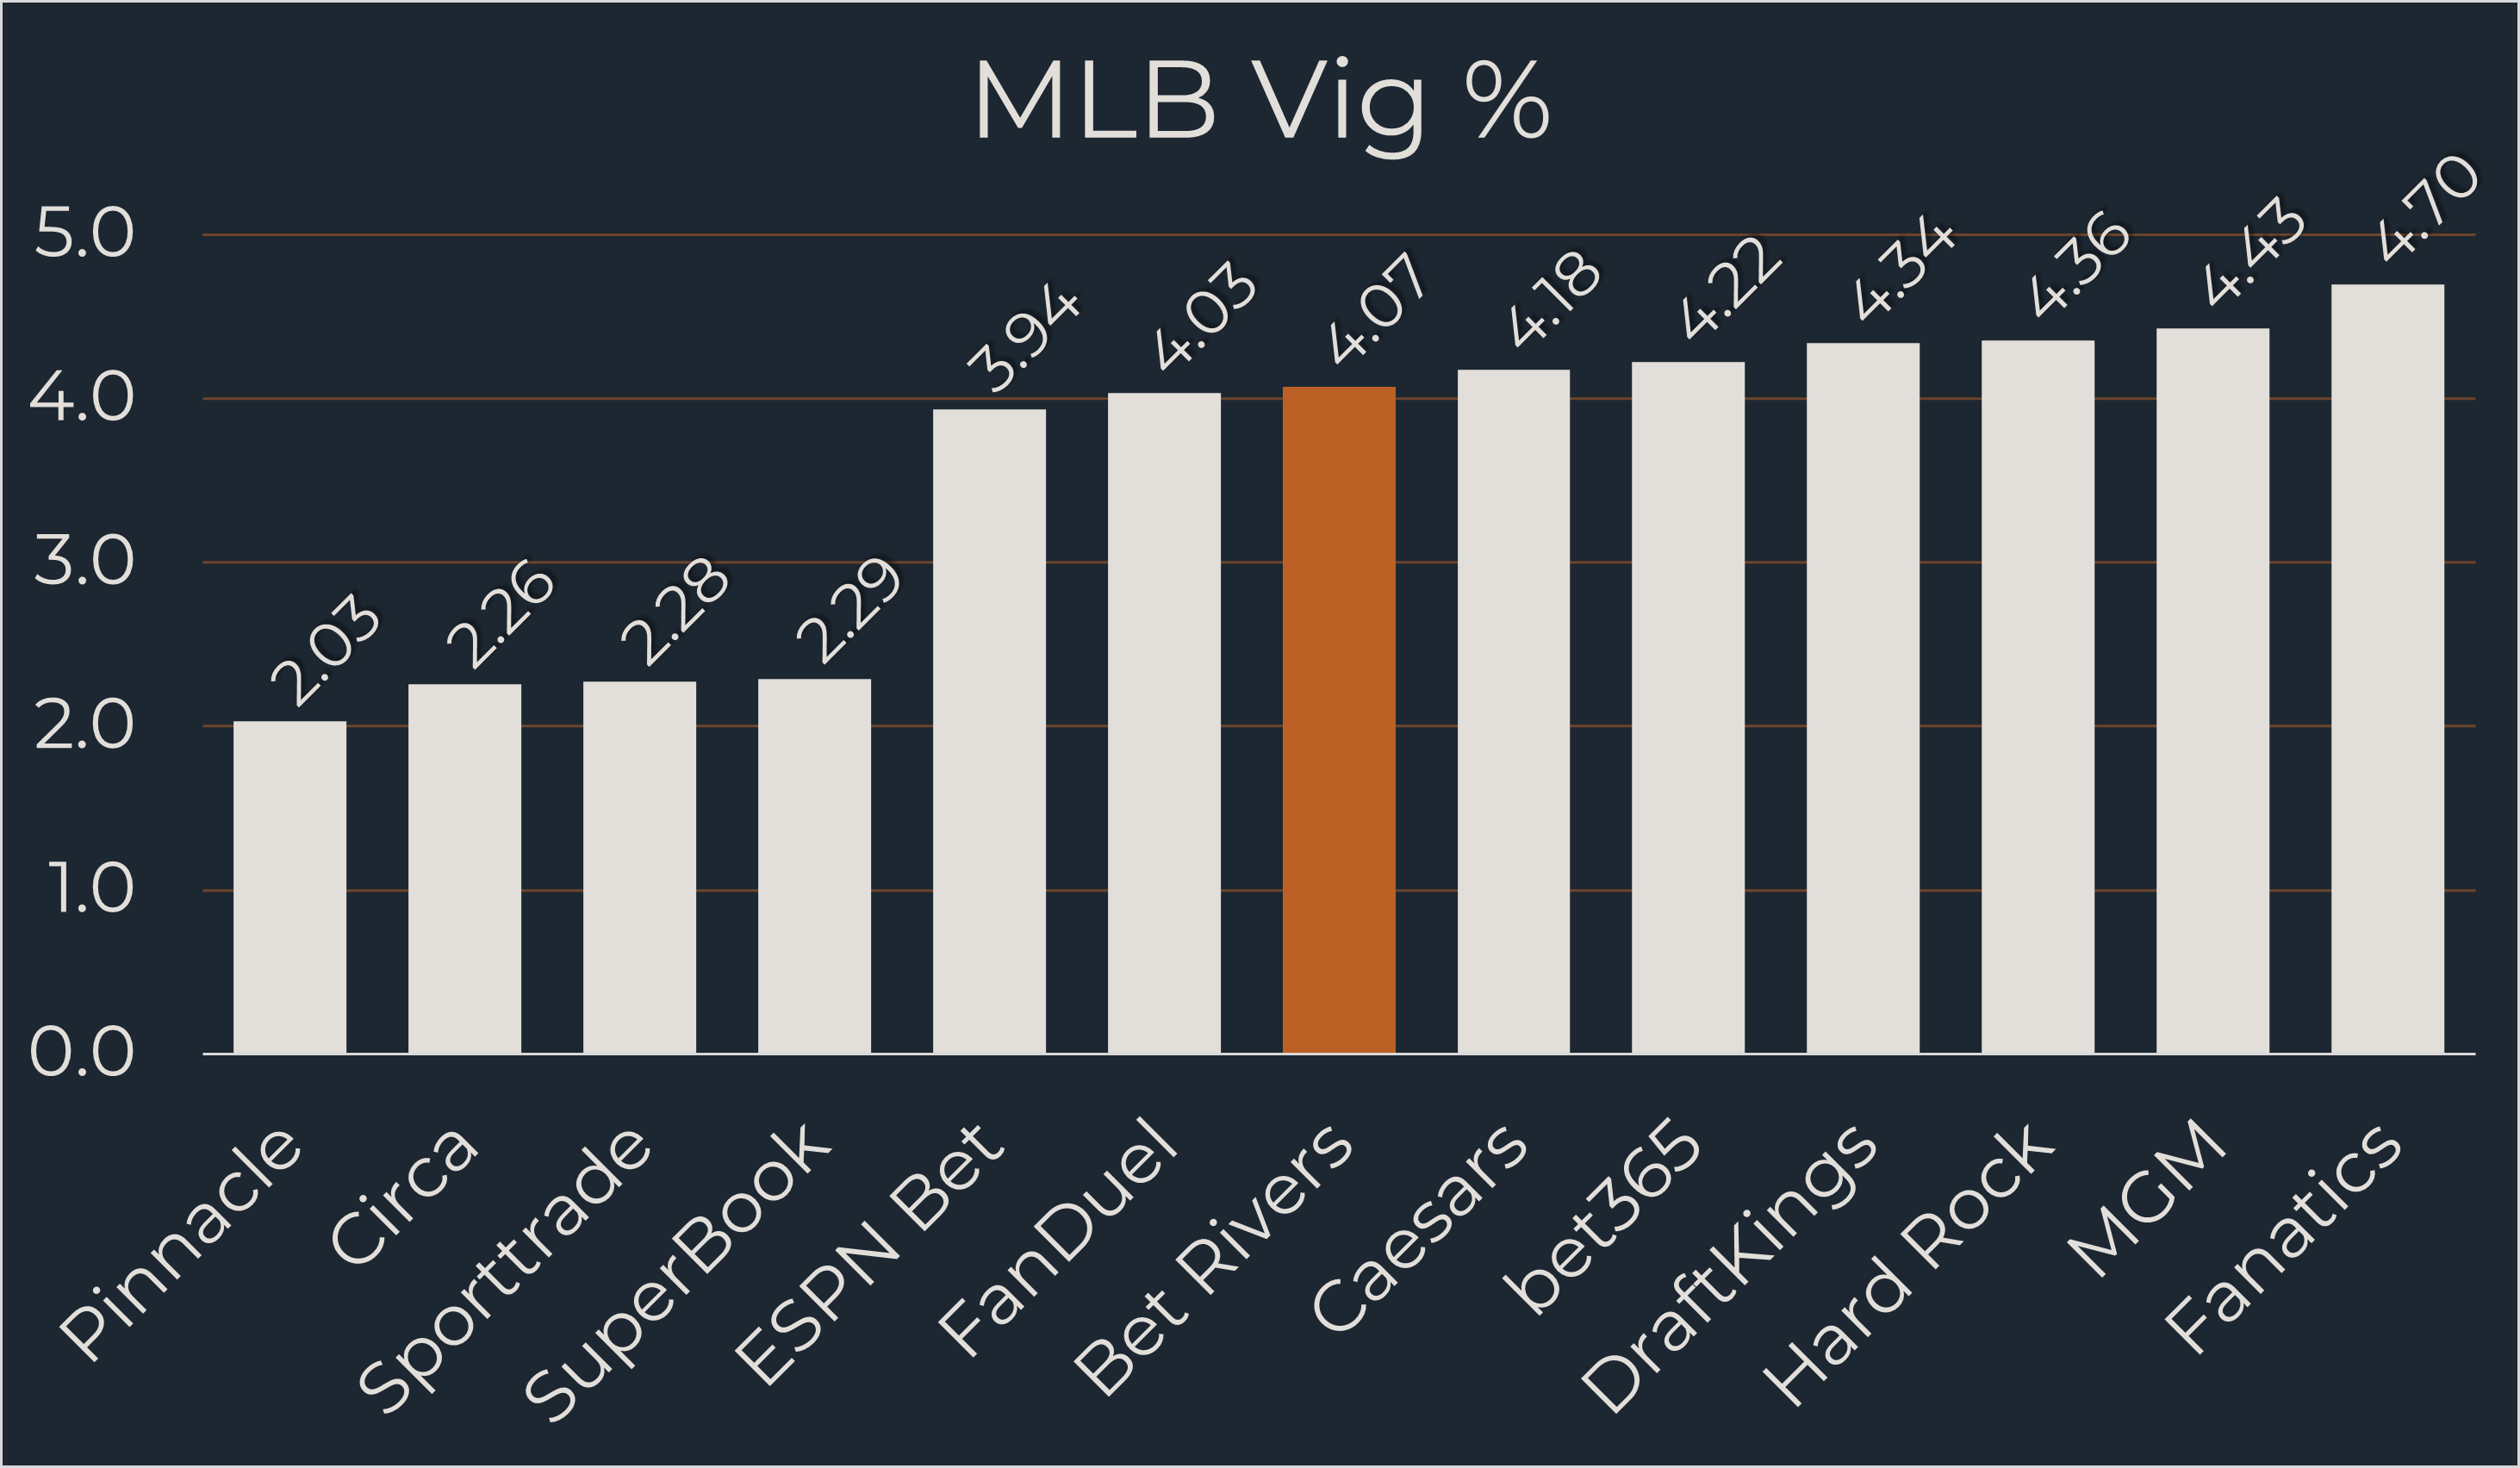 BetRivers MLB Odds comparison chart